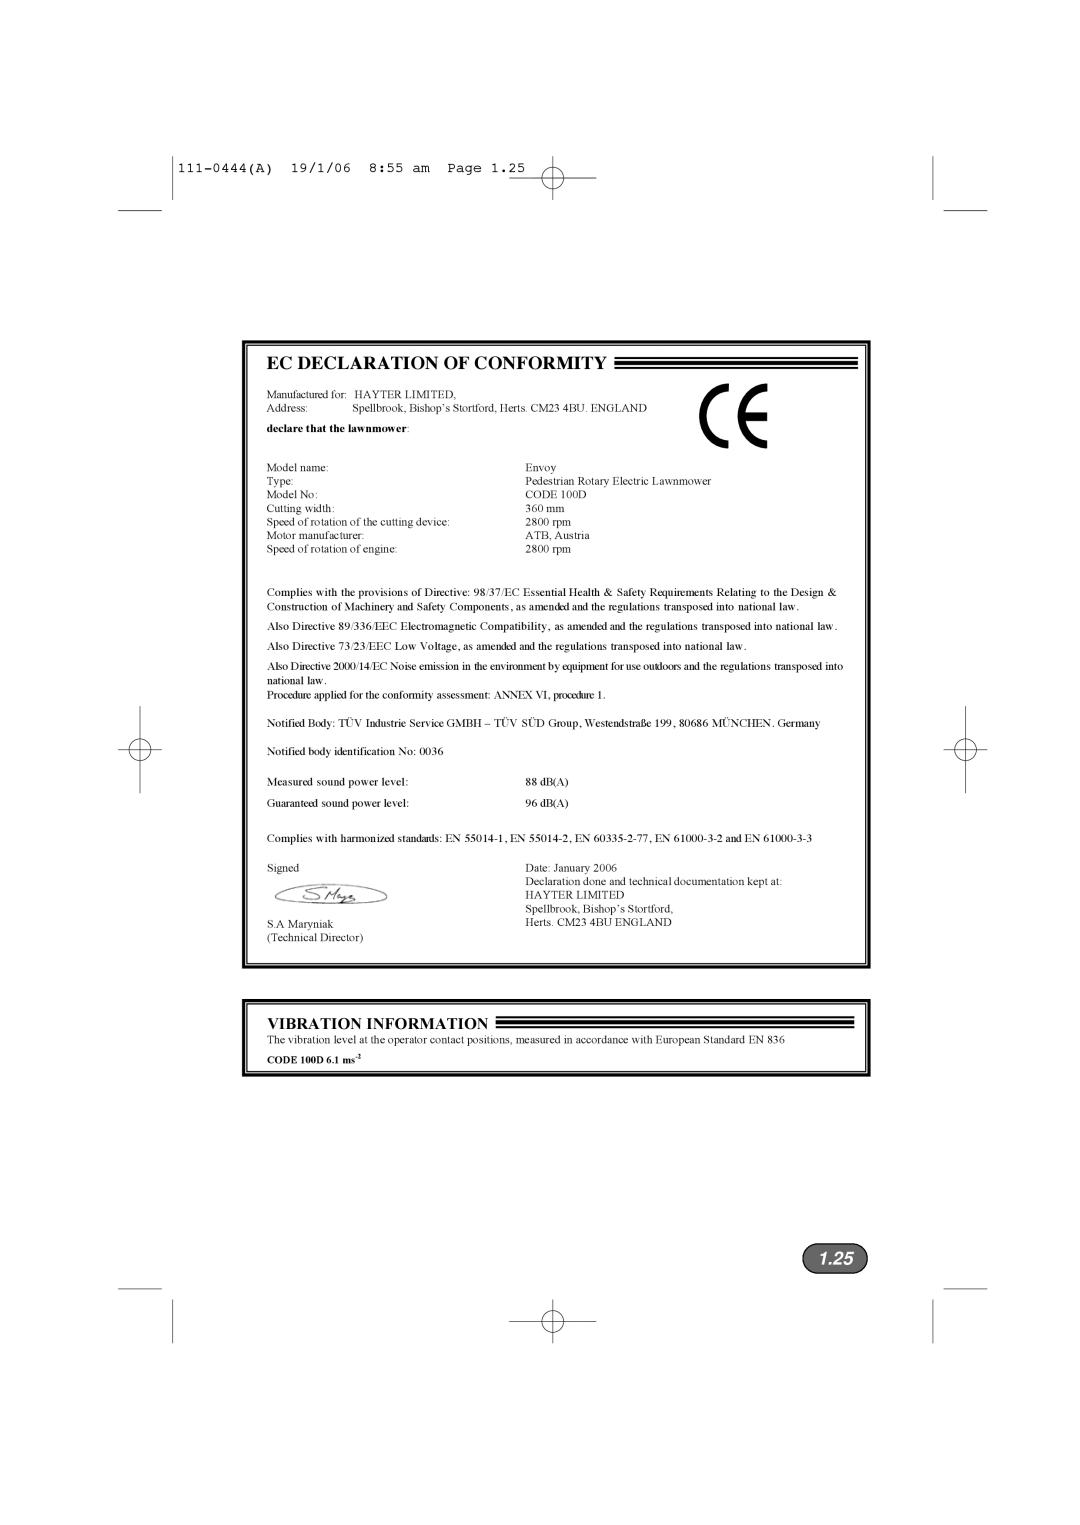 Hayter Mowers 100D manual 1.25, Vibration Information, Ec Declaration Of Conformity, 111-0444A 19/1/06 855 am Page 